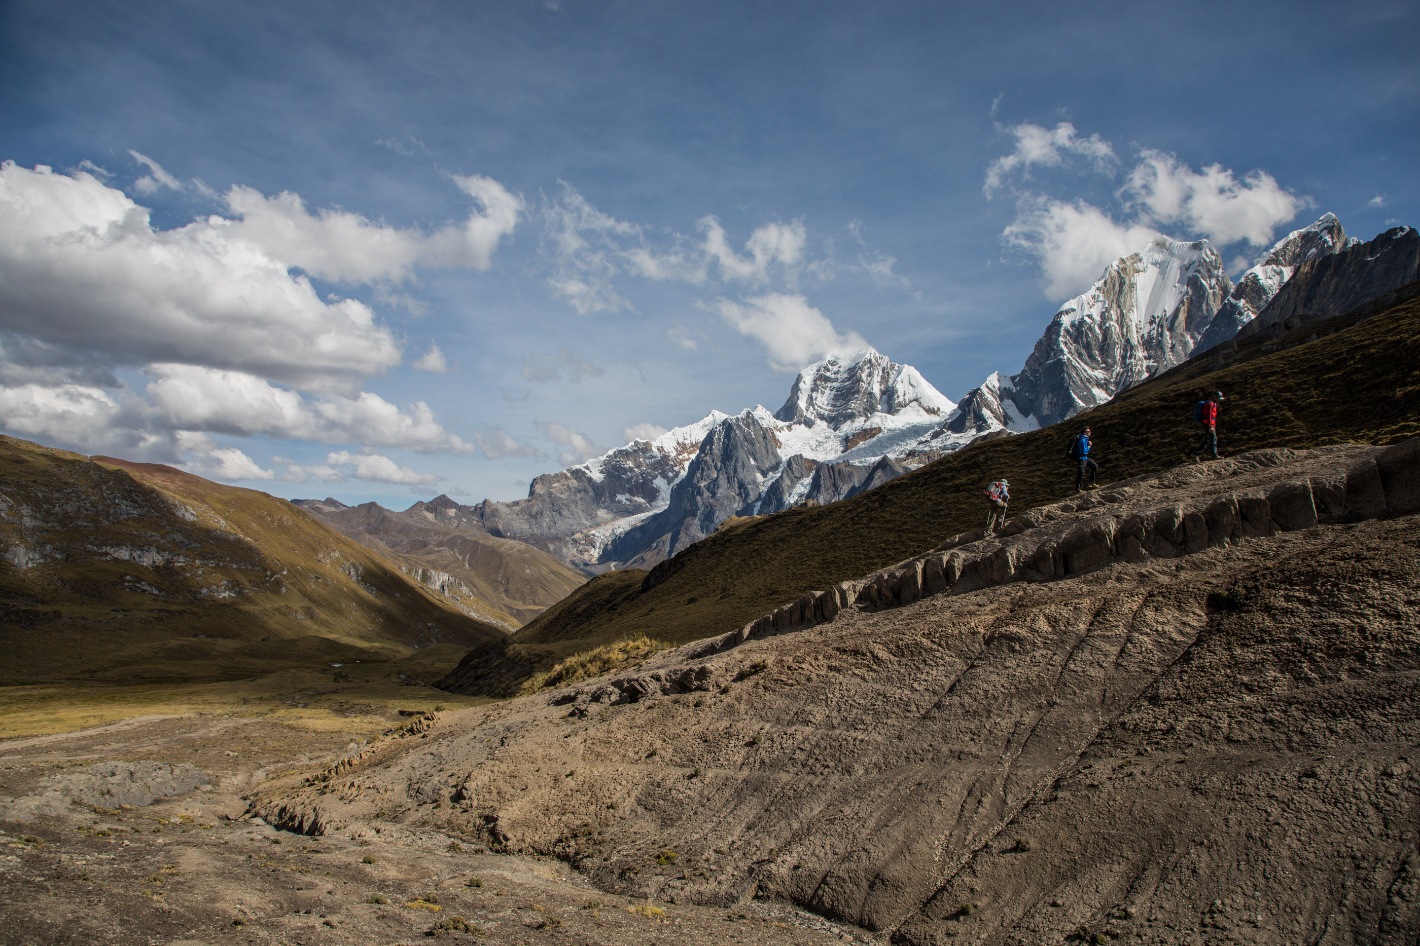 Mountain views on the trail of the Cordillera Huayhuash Trek